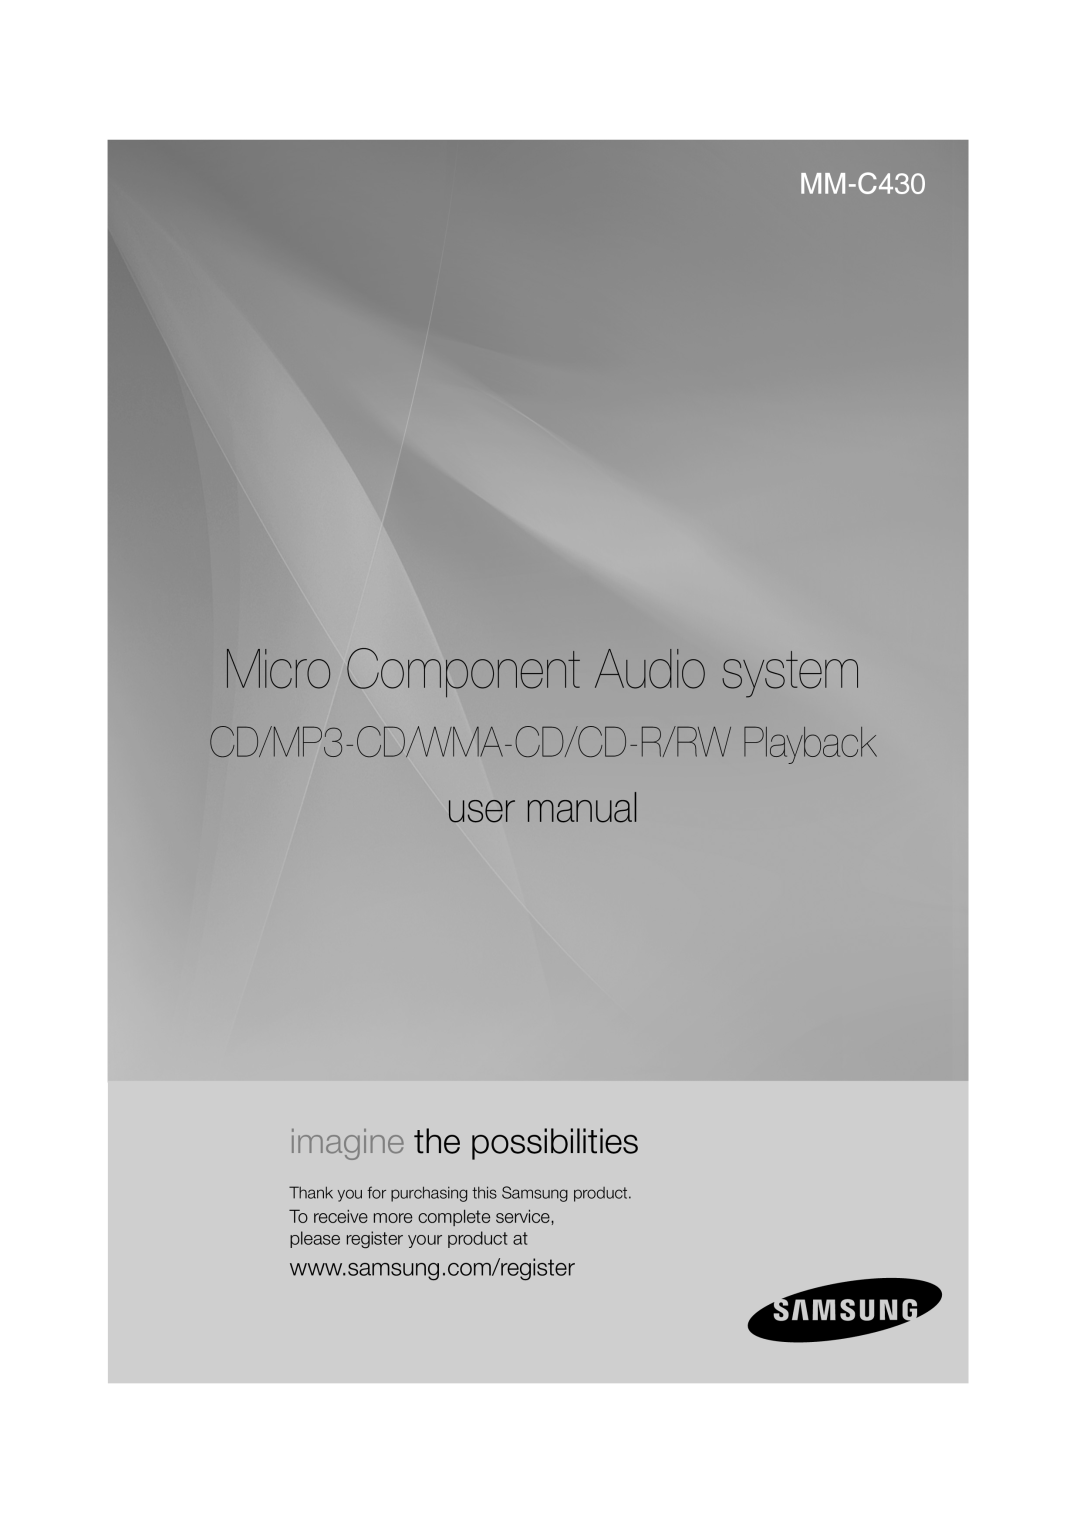 Samsung AH68-02275X user manual Micro Component Audio system, CD/MP3-CD/WMA-CD/CD-R/RWPlayback user manual, MM-C430 